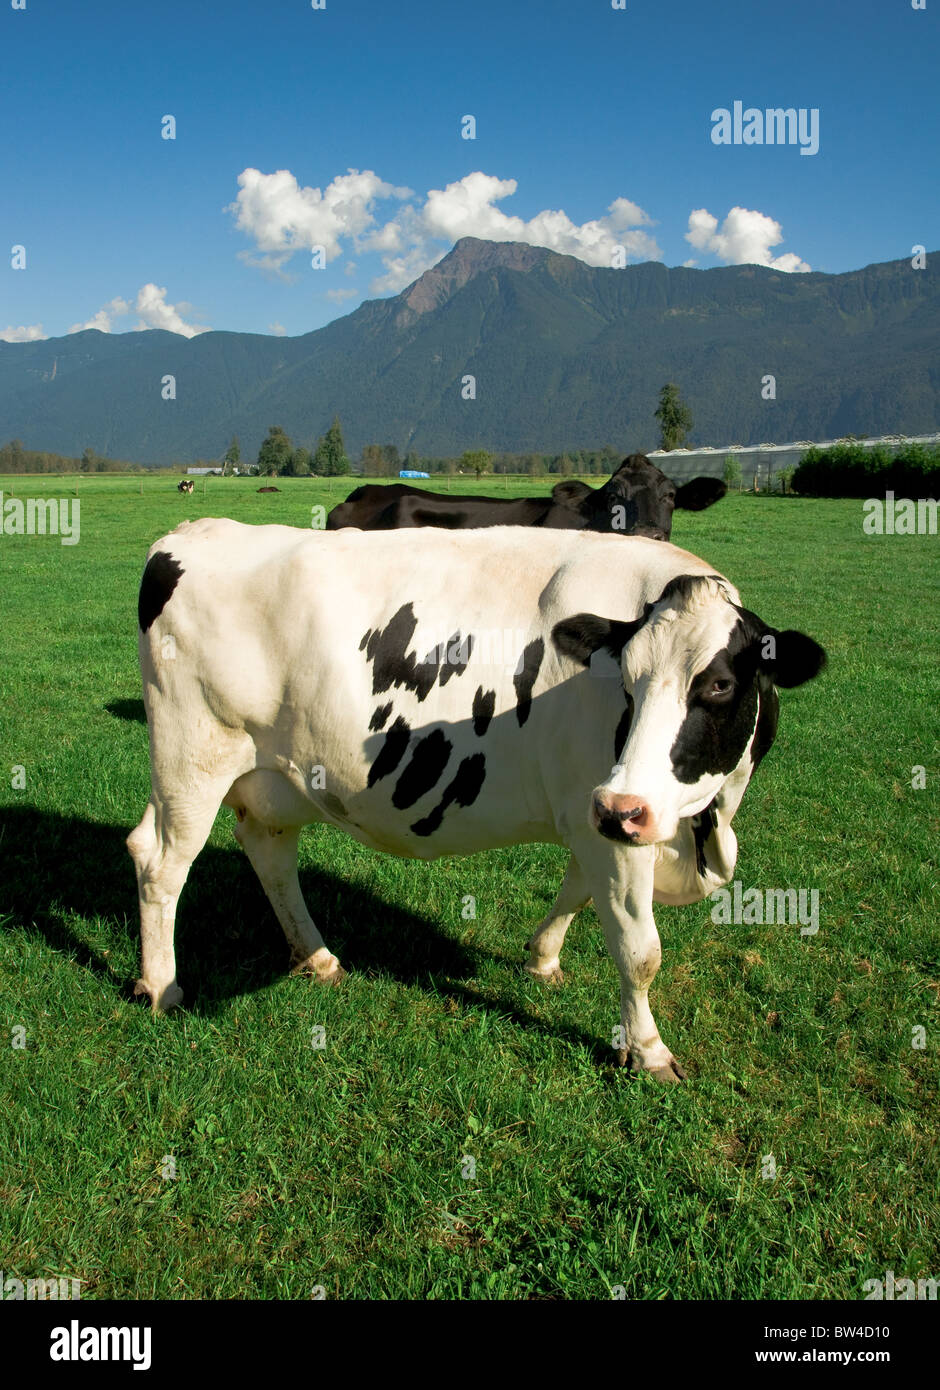 Holstein dairy cows graze on a grassy farm field Stock Photo